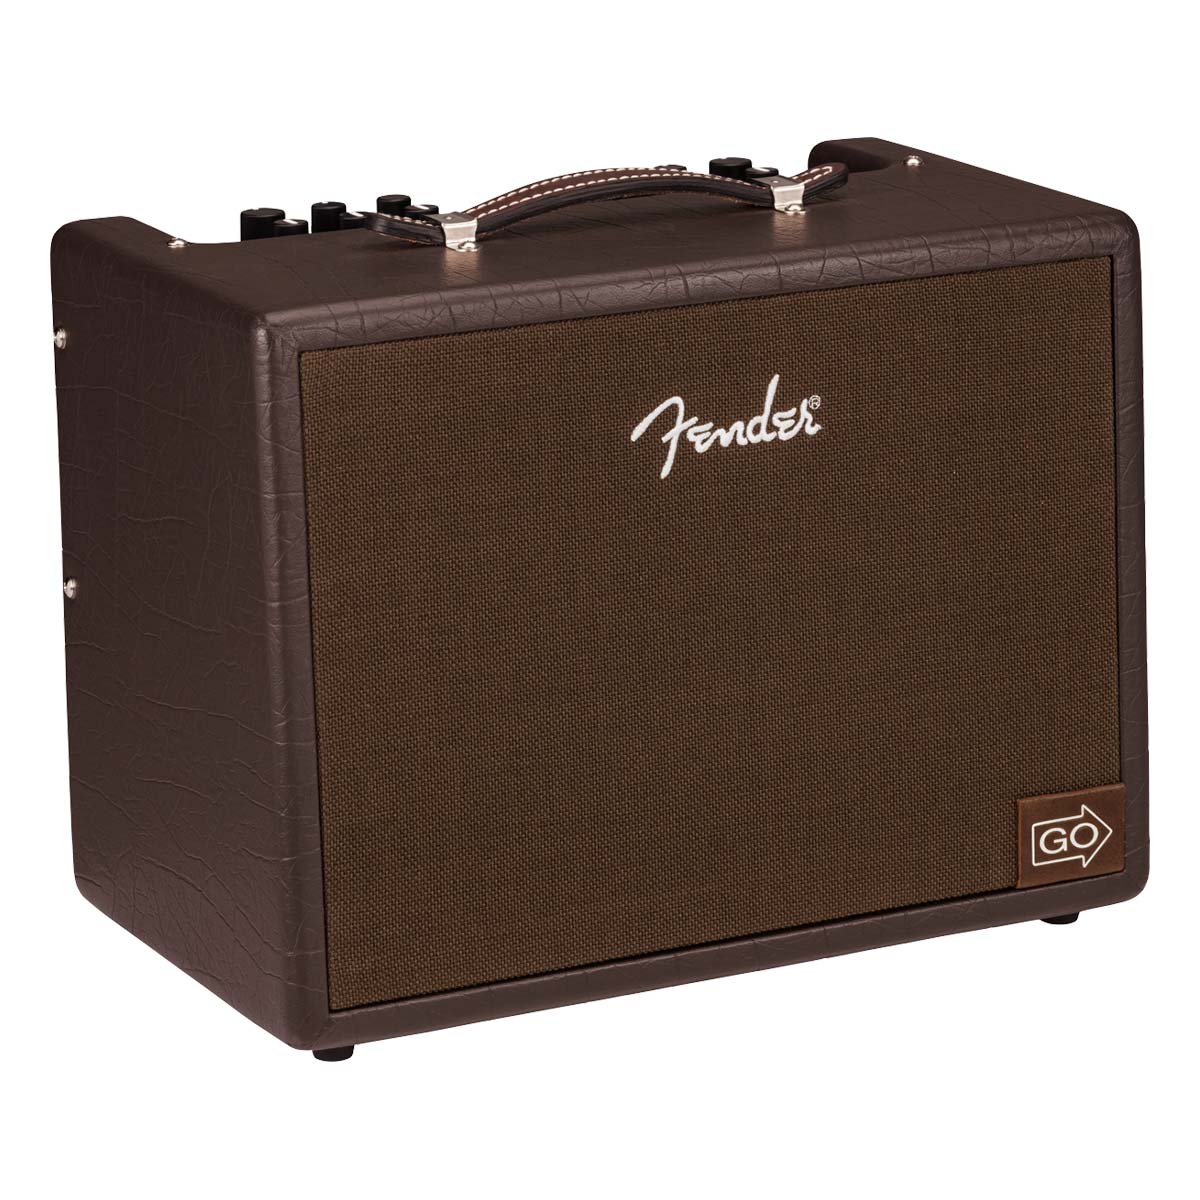 Amplificador acústico a baterías Fender Acoustic Junior GO